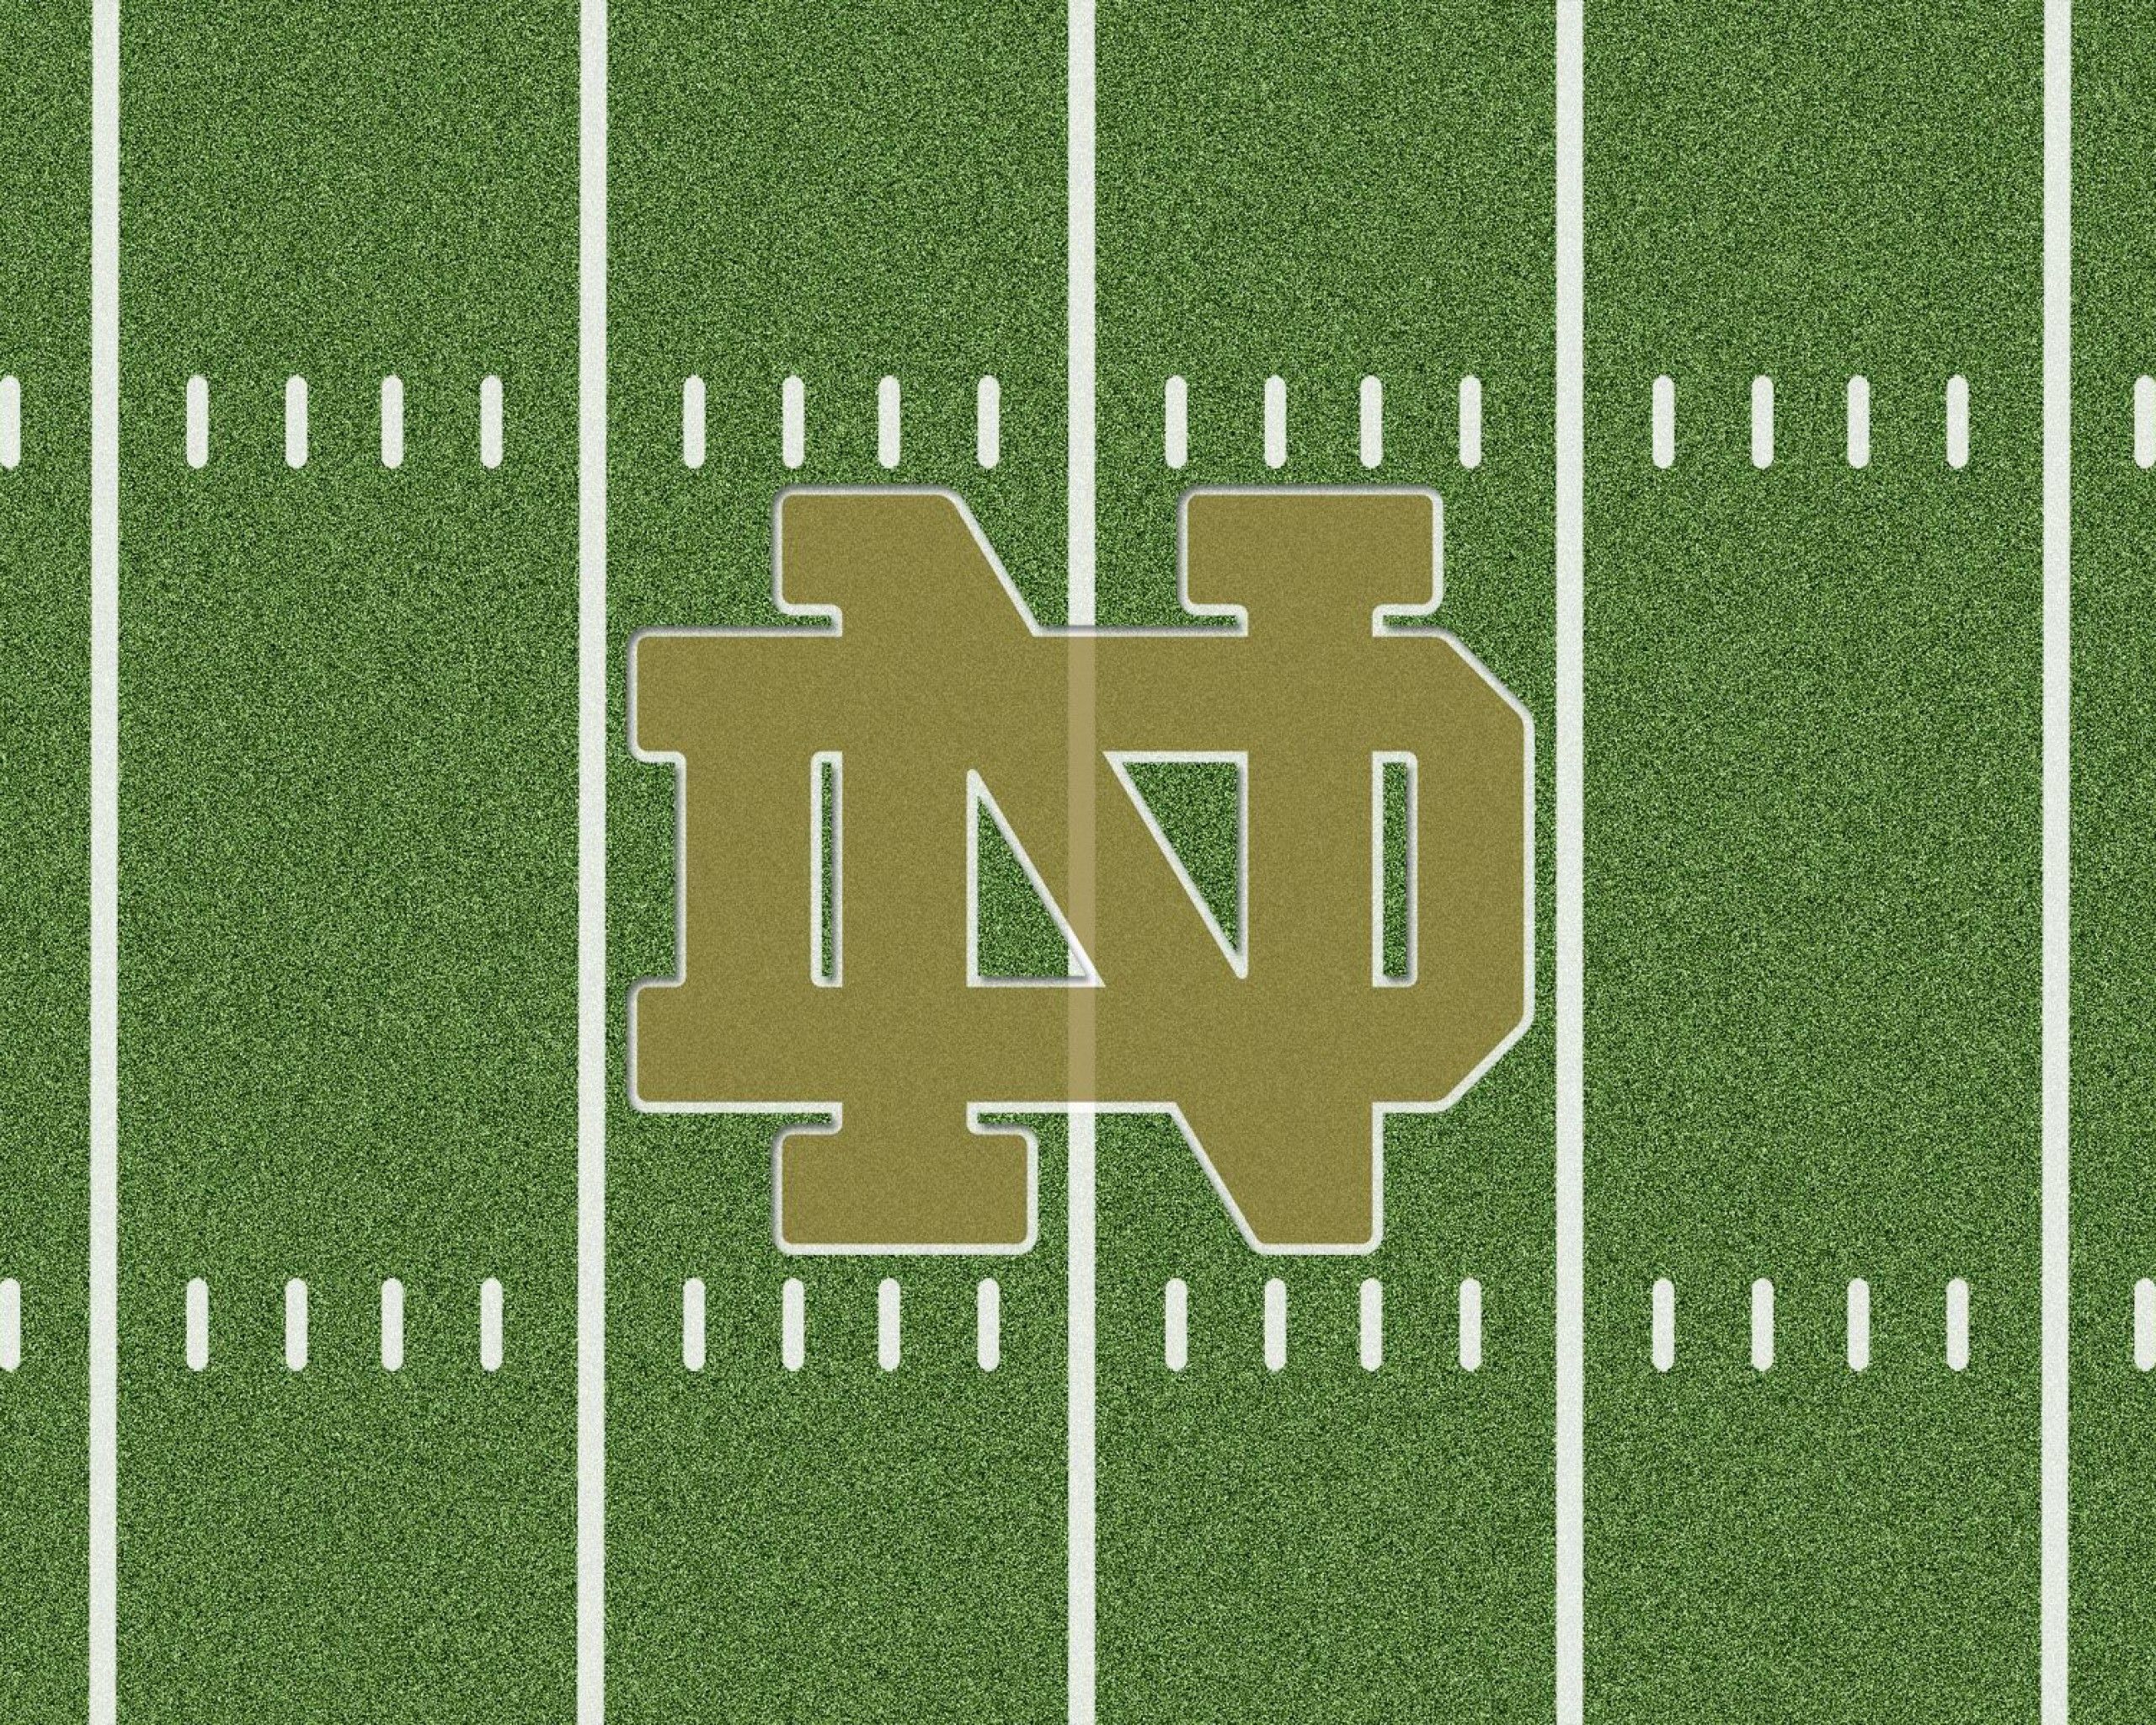 Notre Dame Logo On Football Field | HD Wallpapers